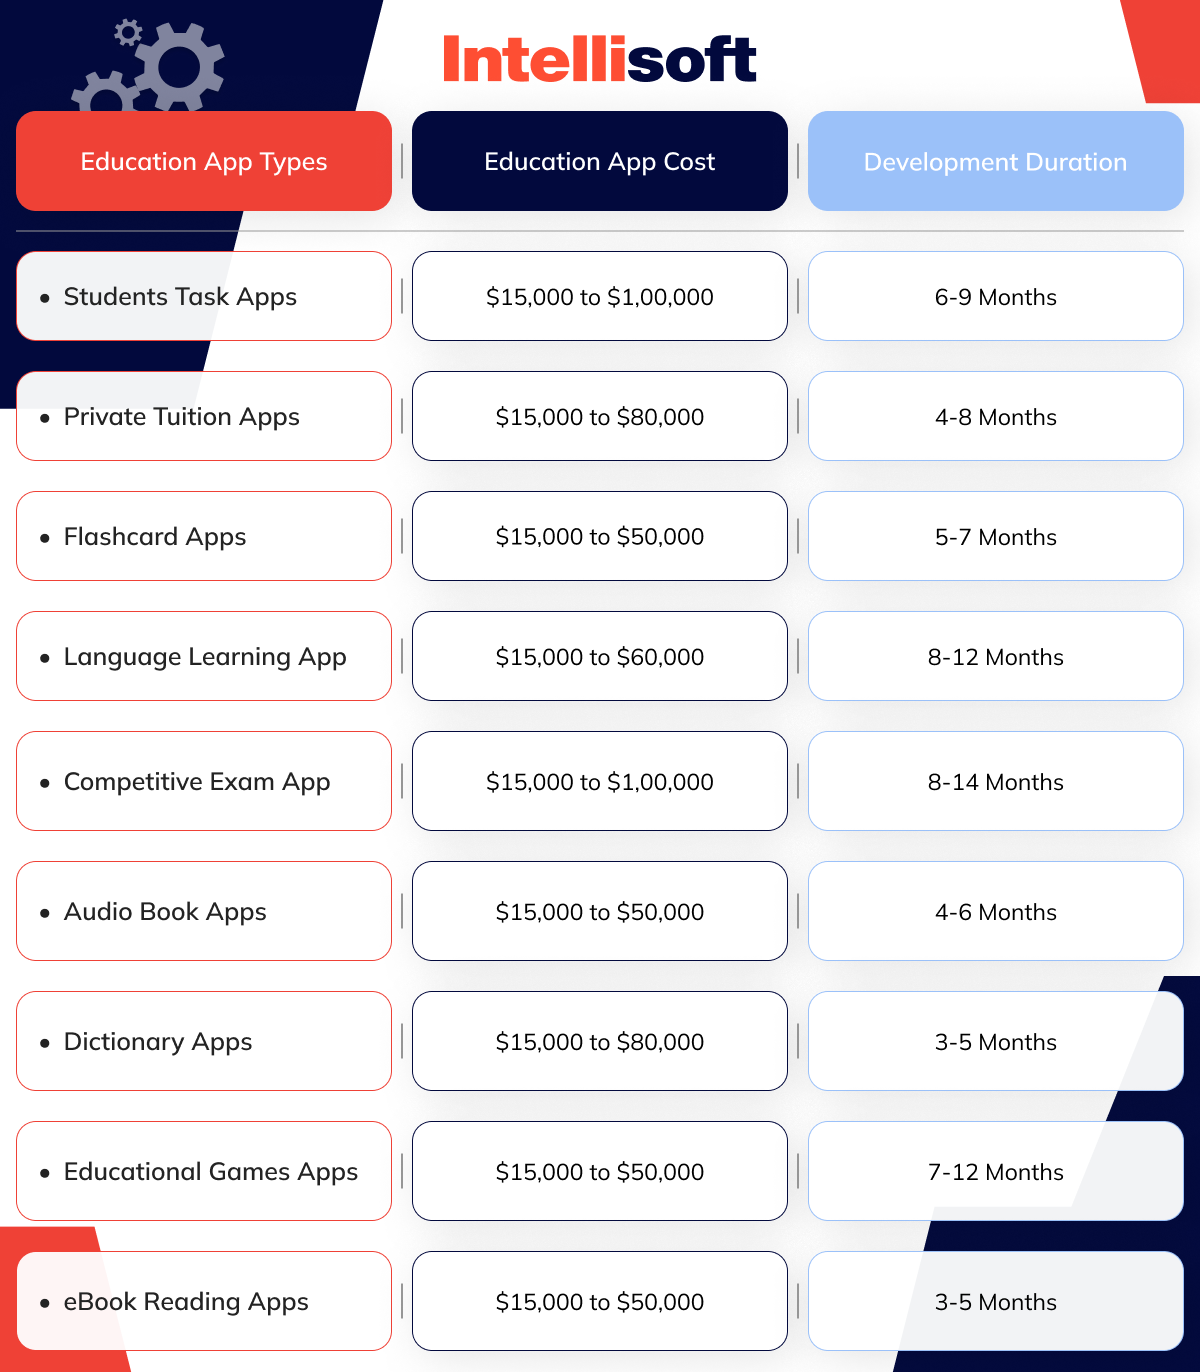 educational app development cost based on app type